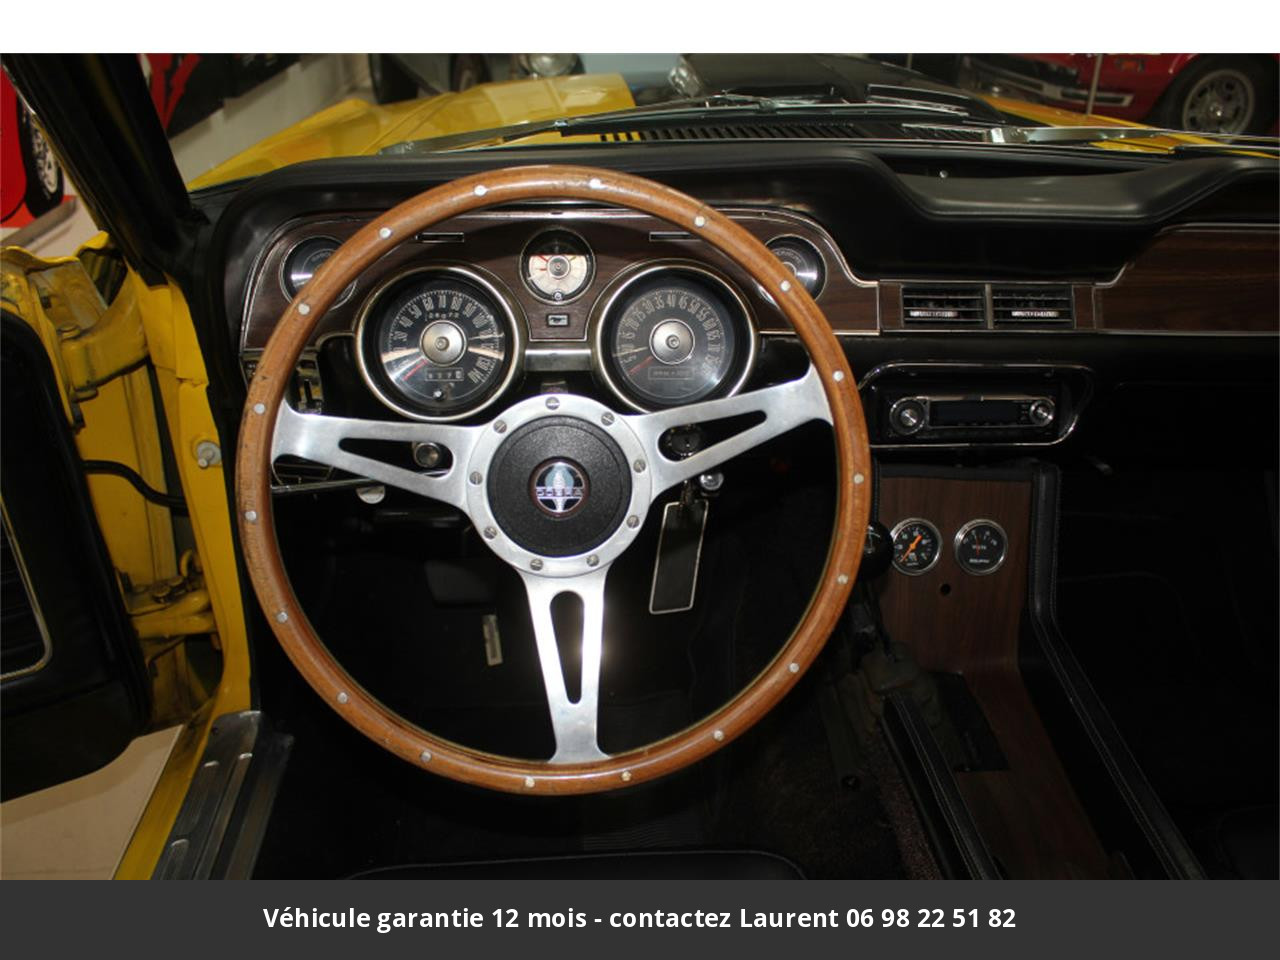 Ford Mustang 351 v8 1968 prix tout compris